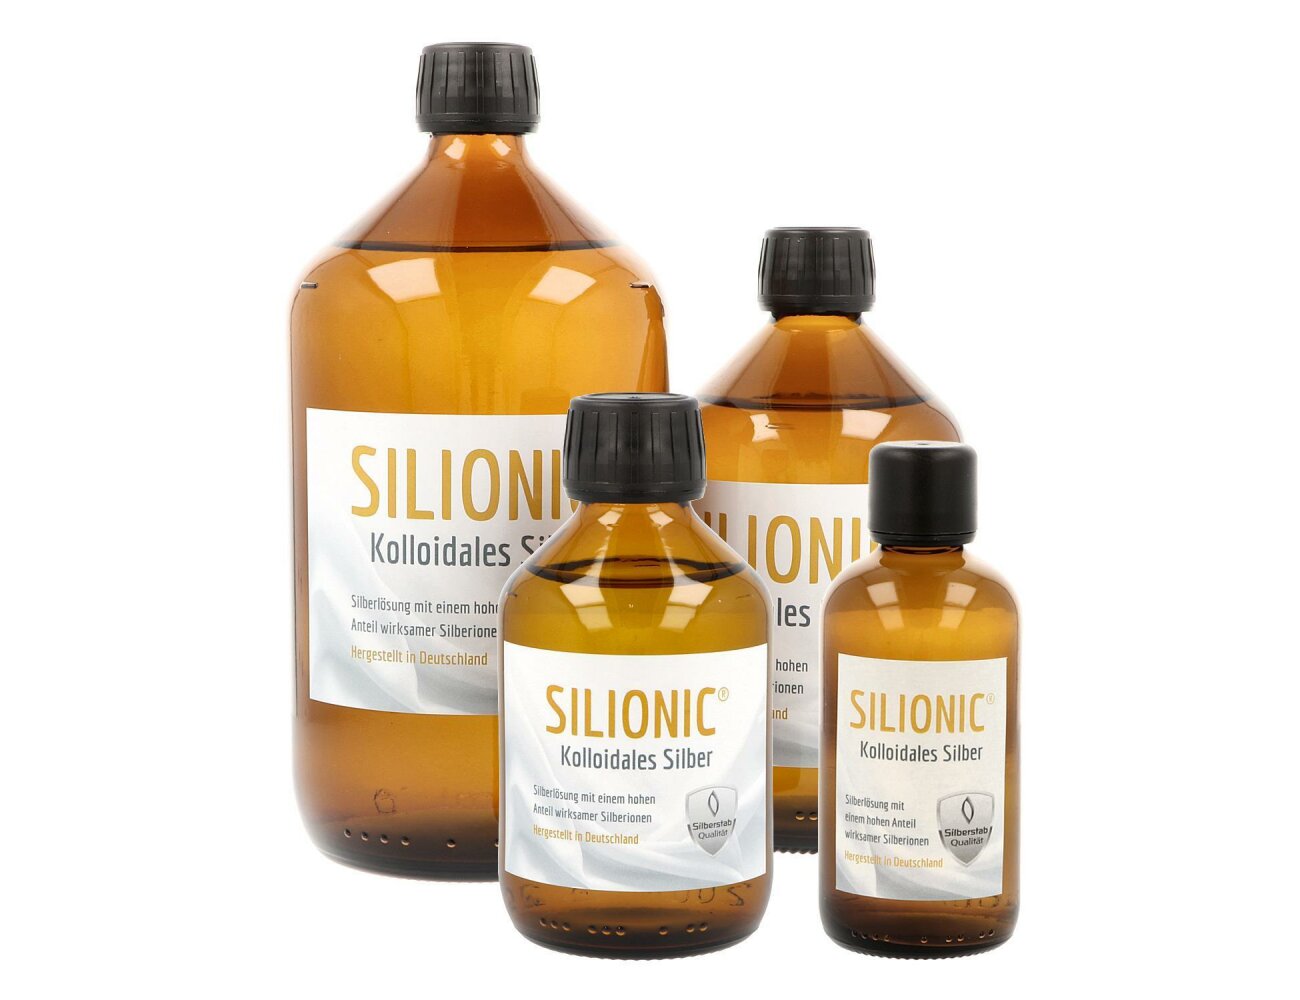 Silionic Kolloidales Silber 100 ppm